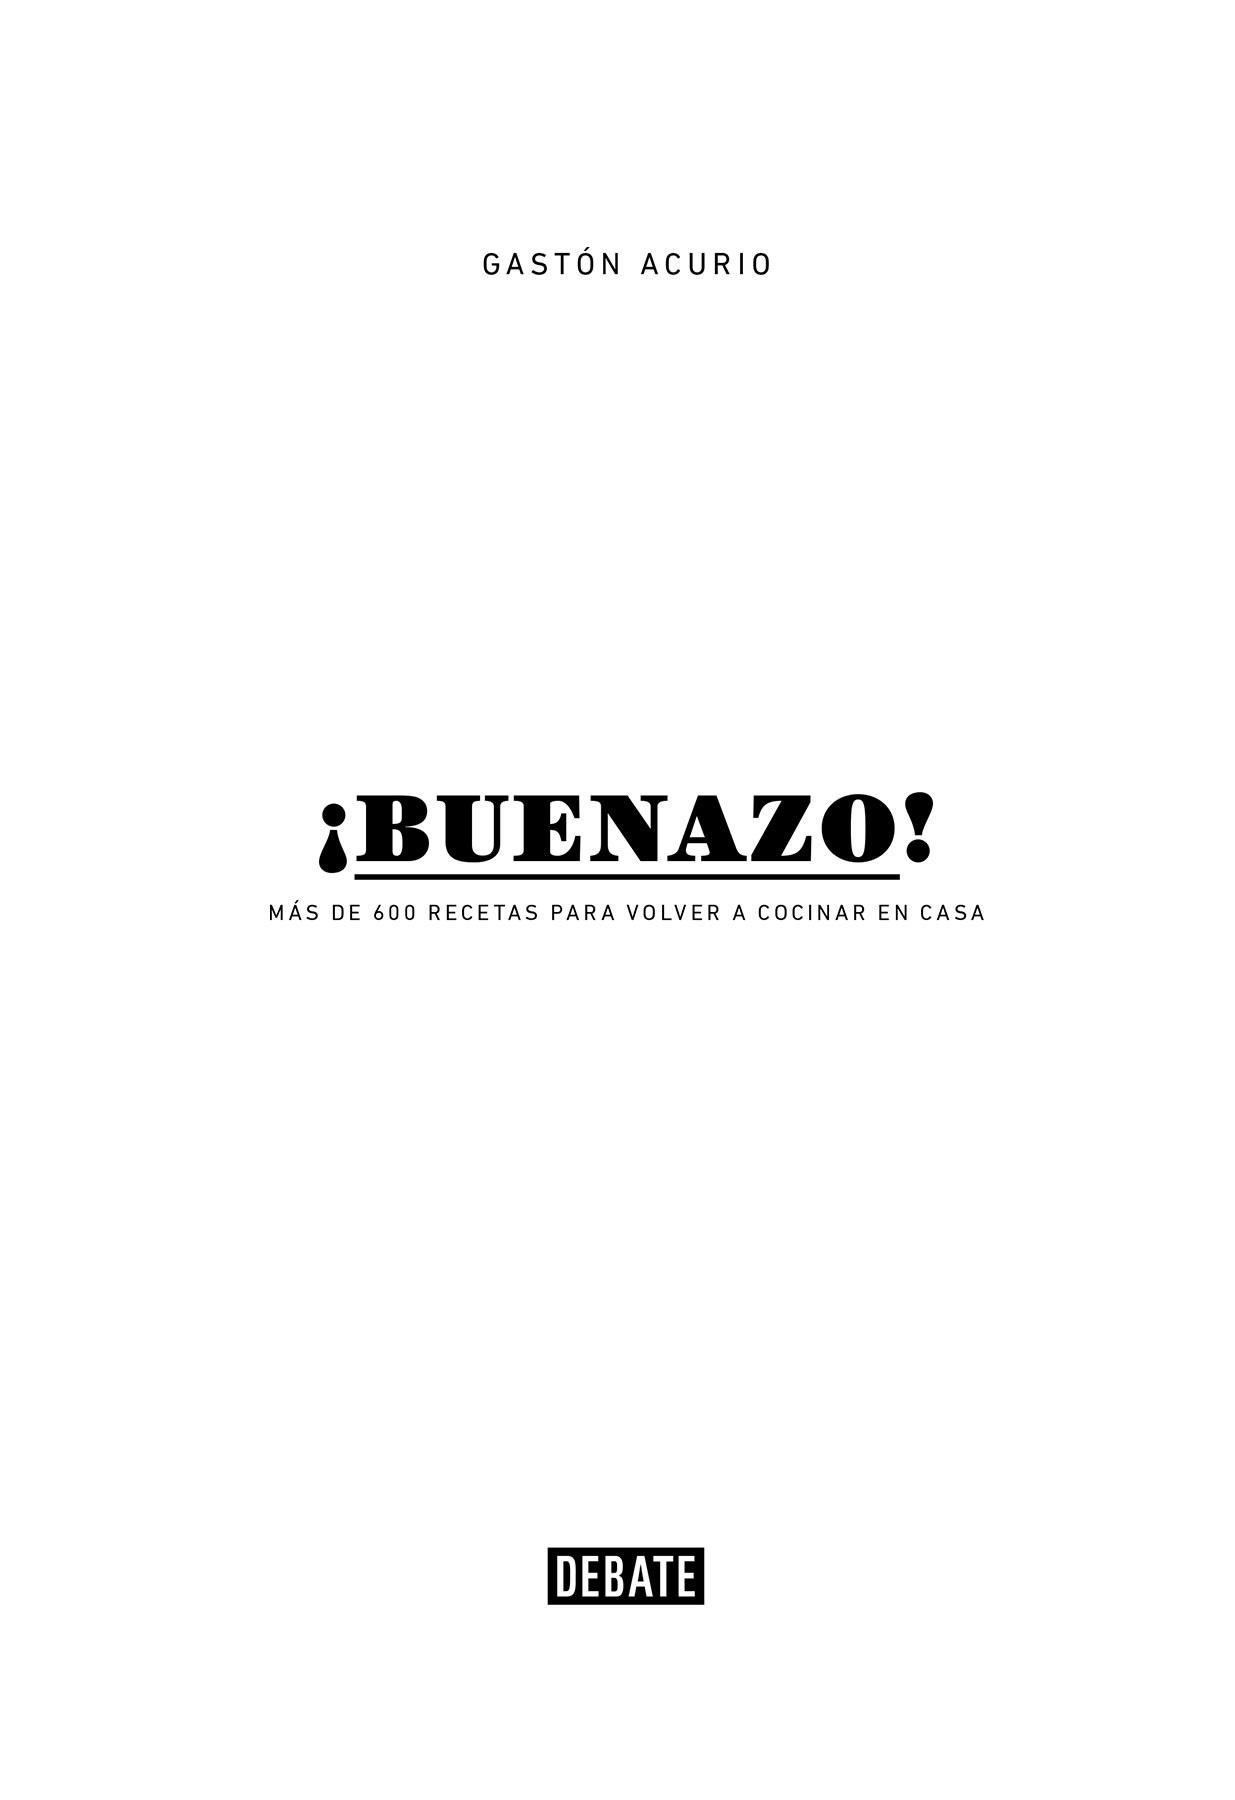 Buenazo - image 3